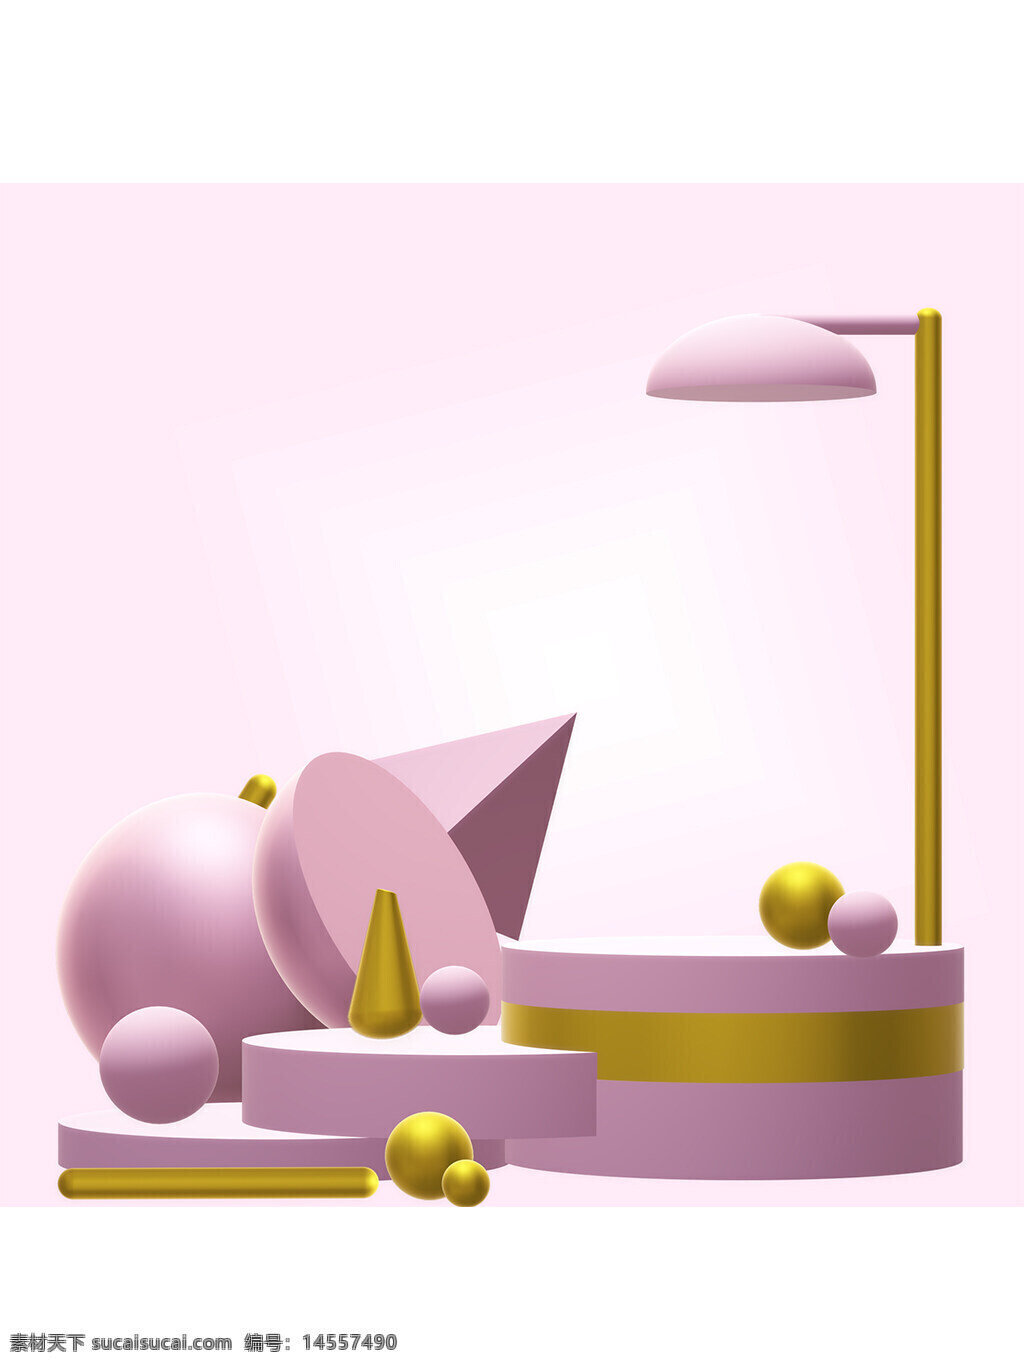 3d 立体 几何 图形 粉色 金色 拼色 展示台 化妆品 现代生活